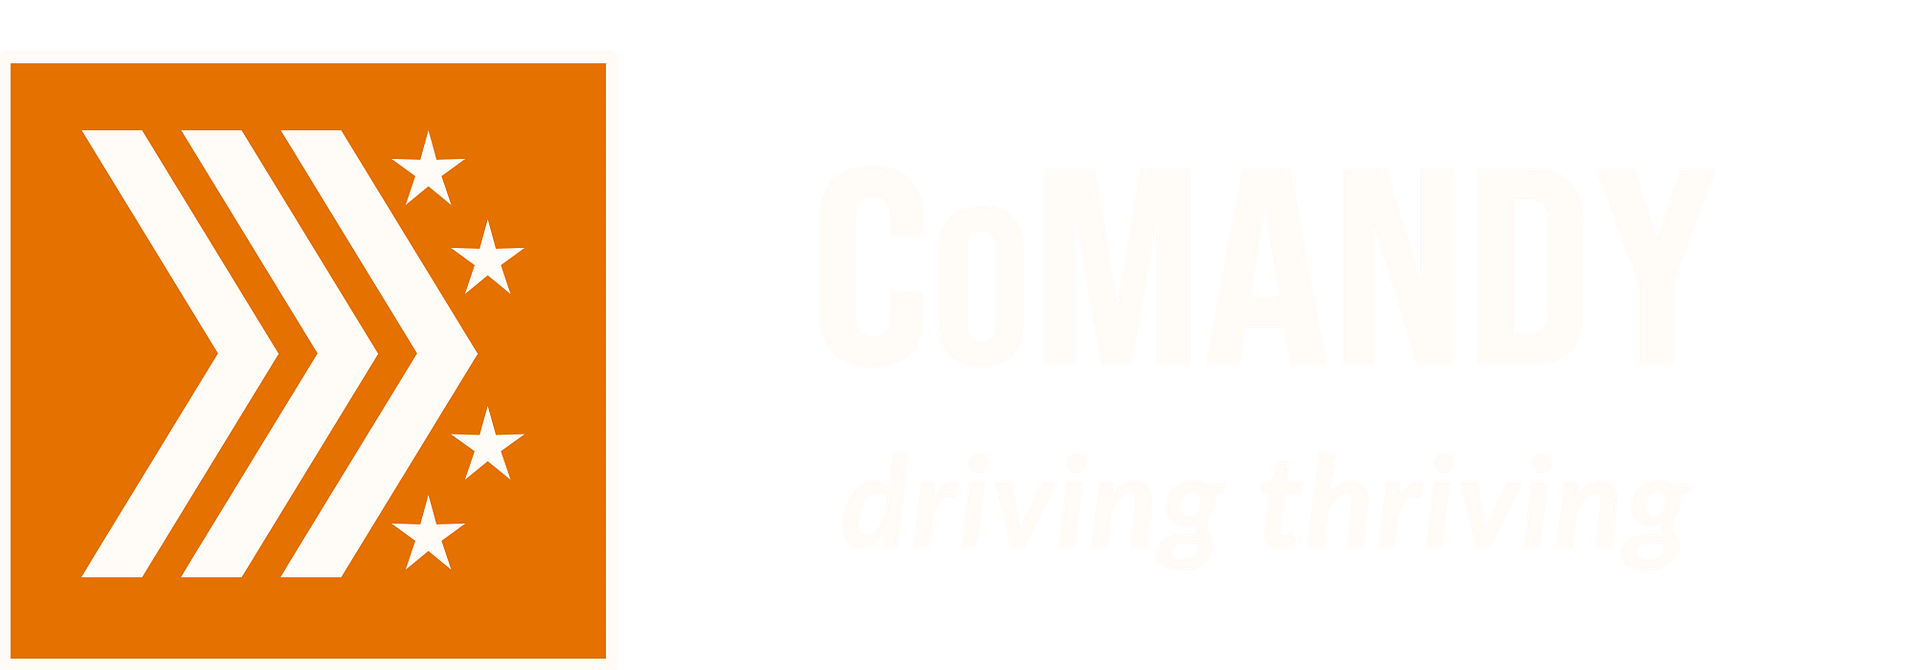 CoMandy Logo, Driving Thriving